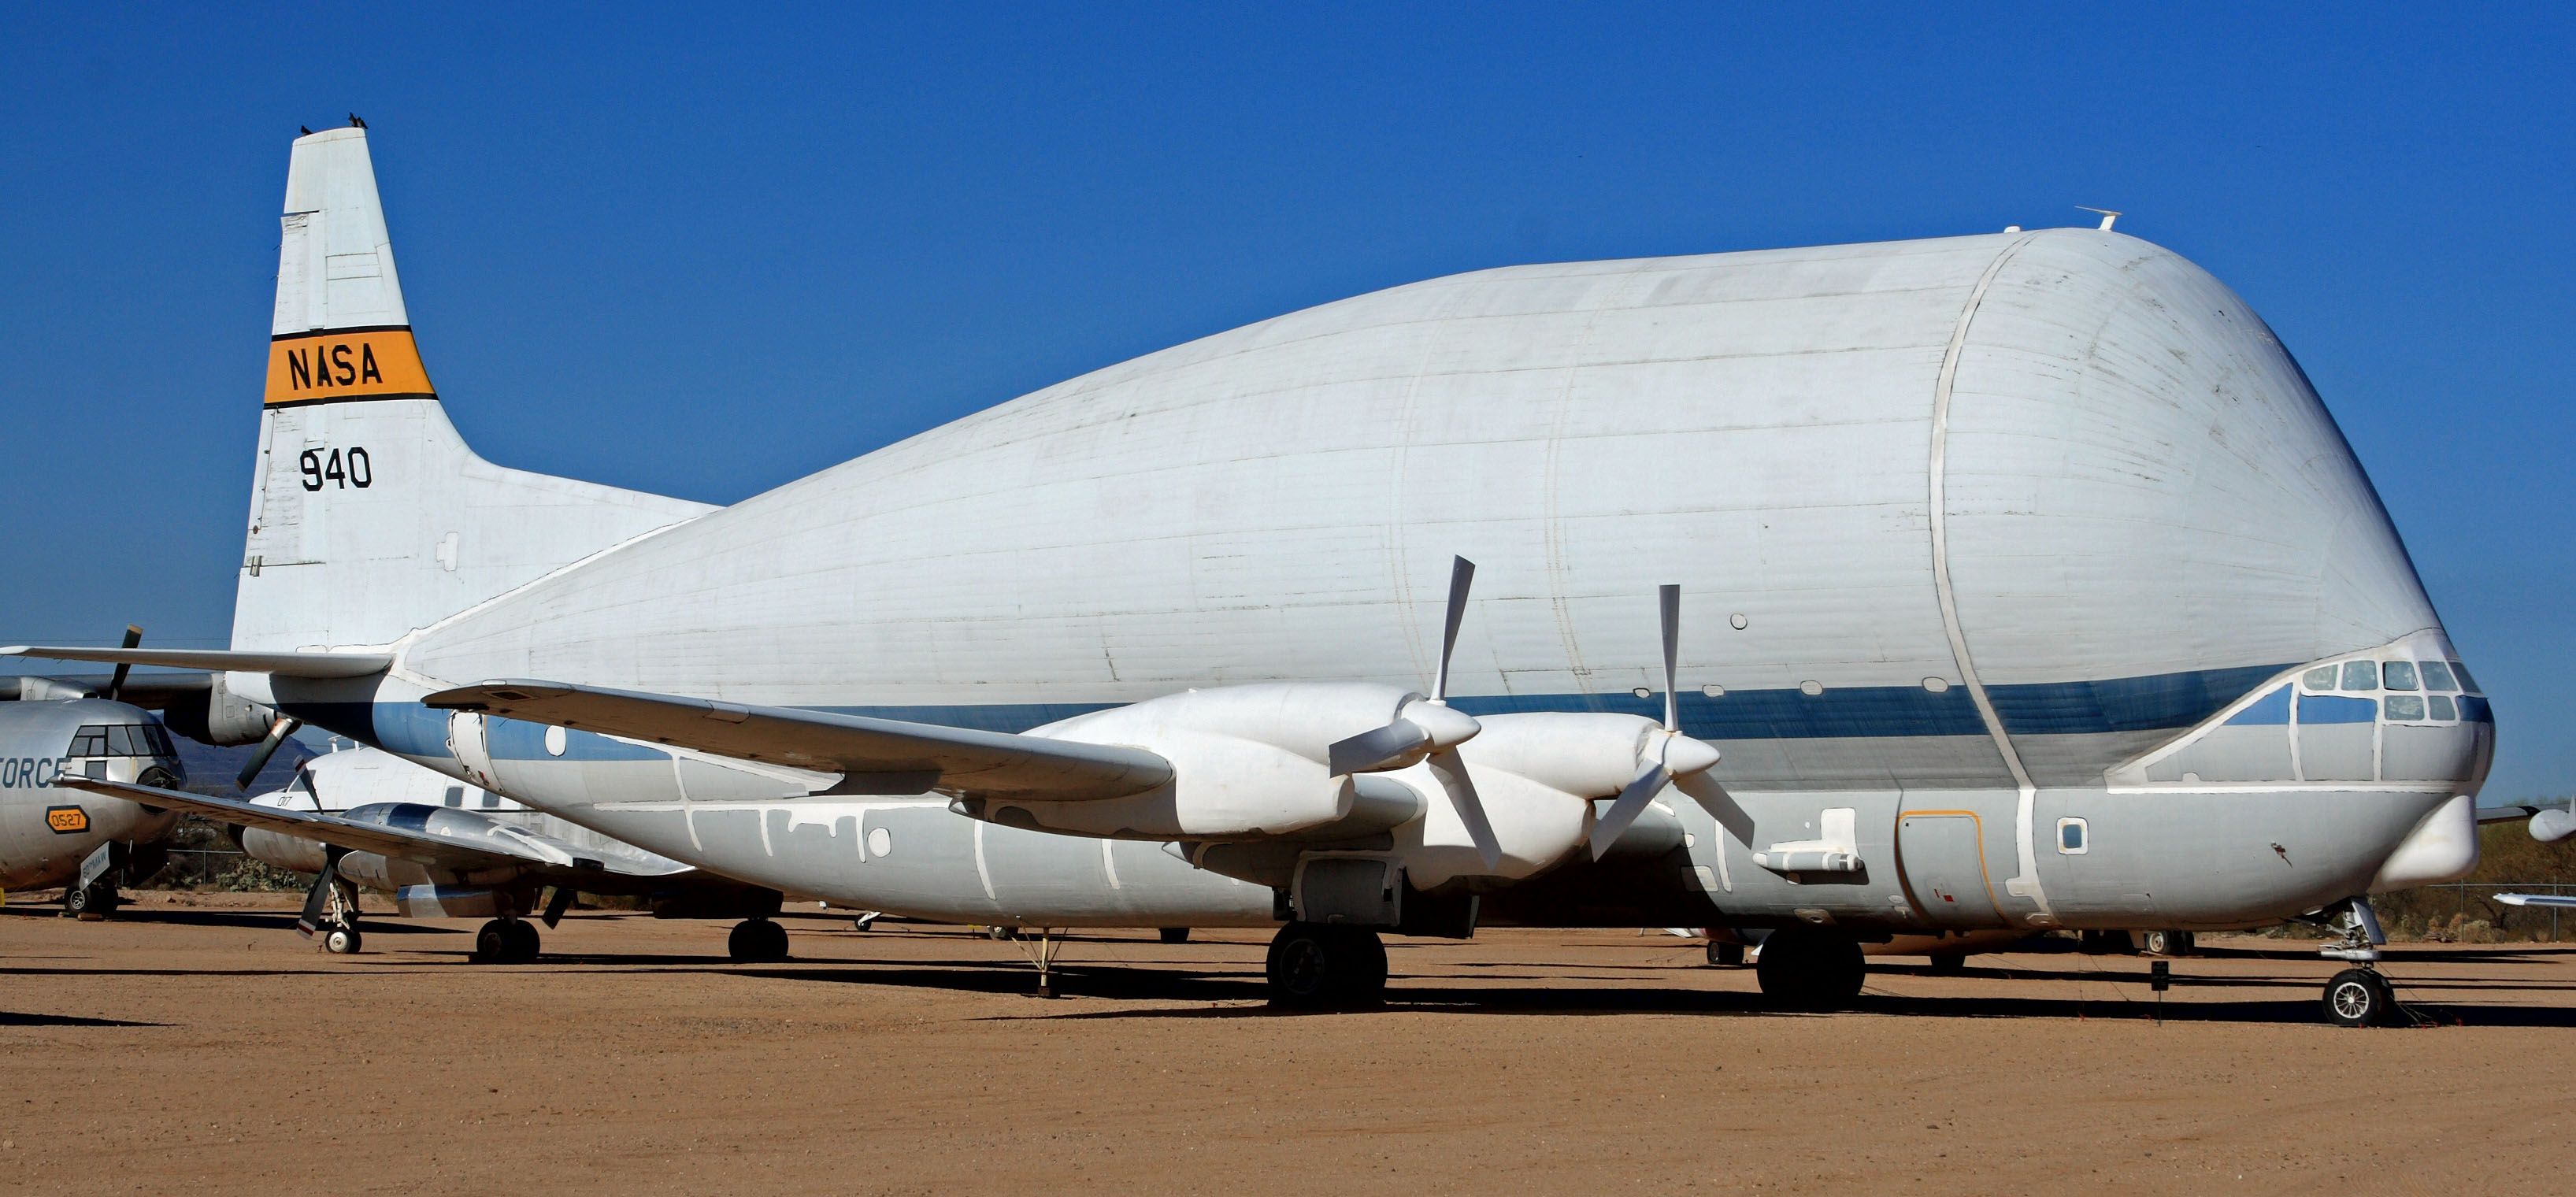 A NASA Super Guppy parked at an airfield.